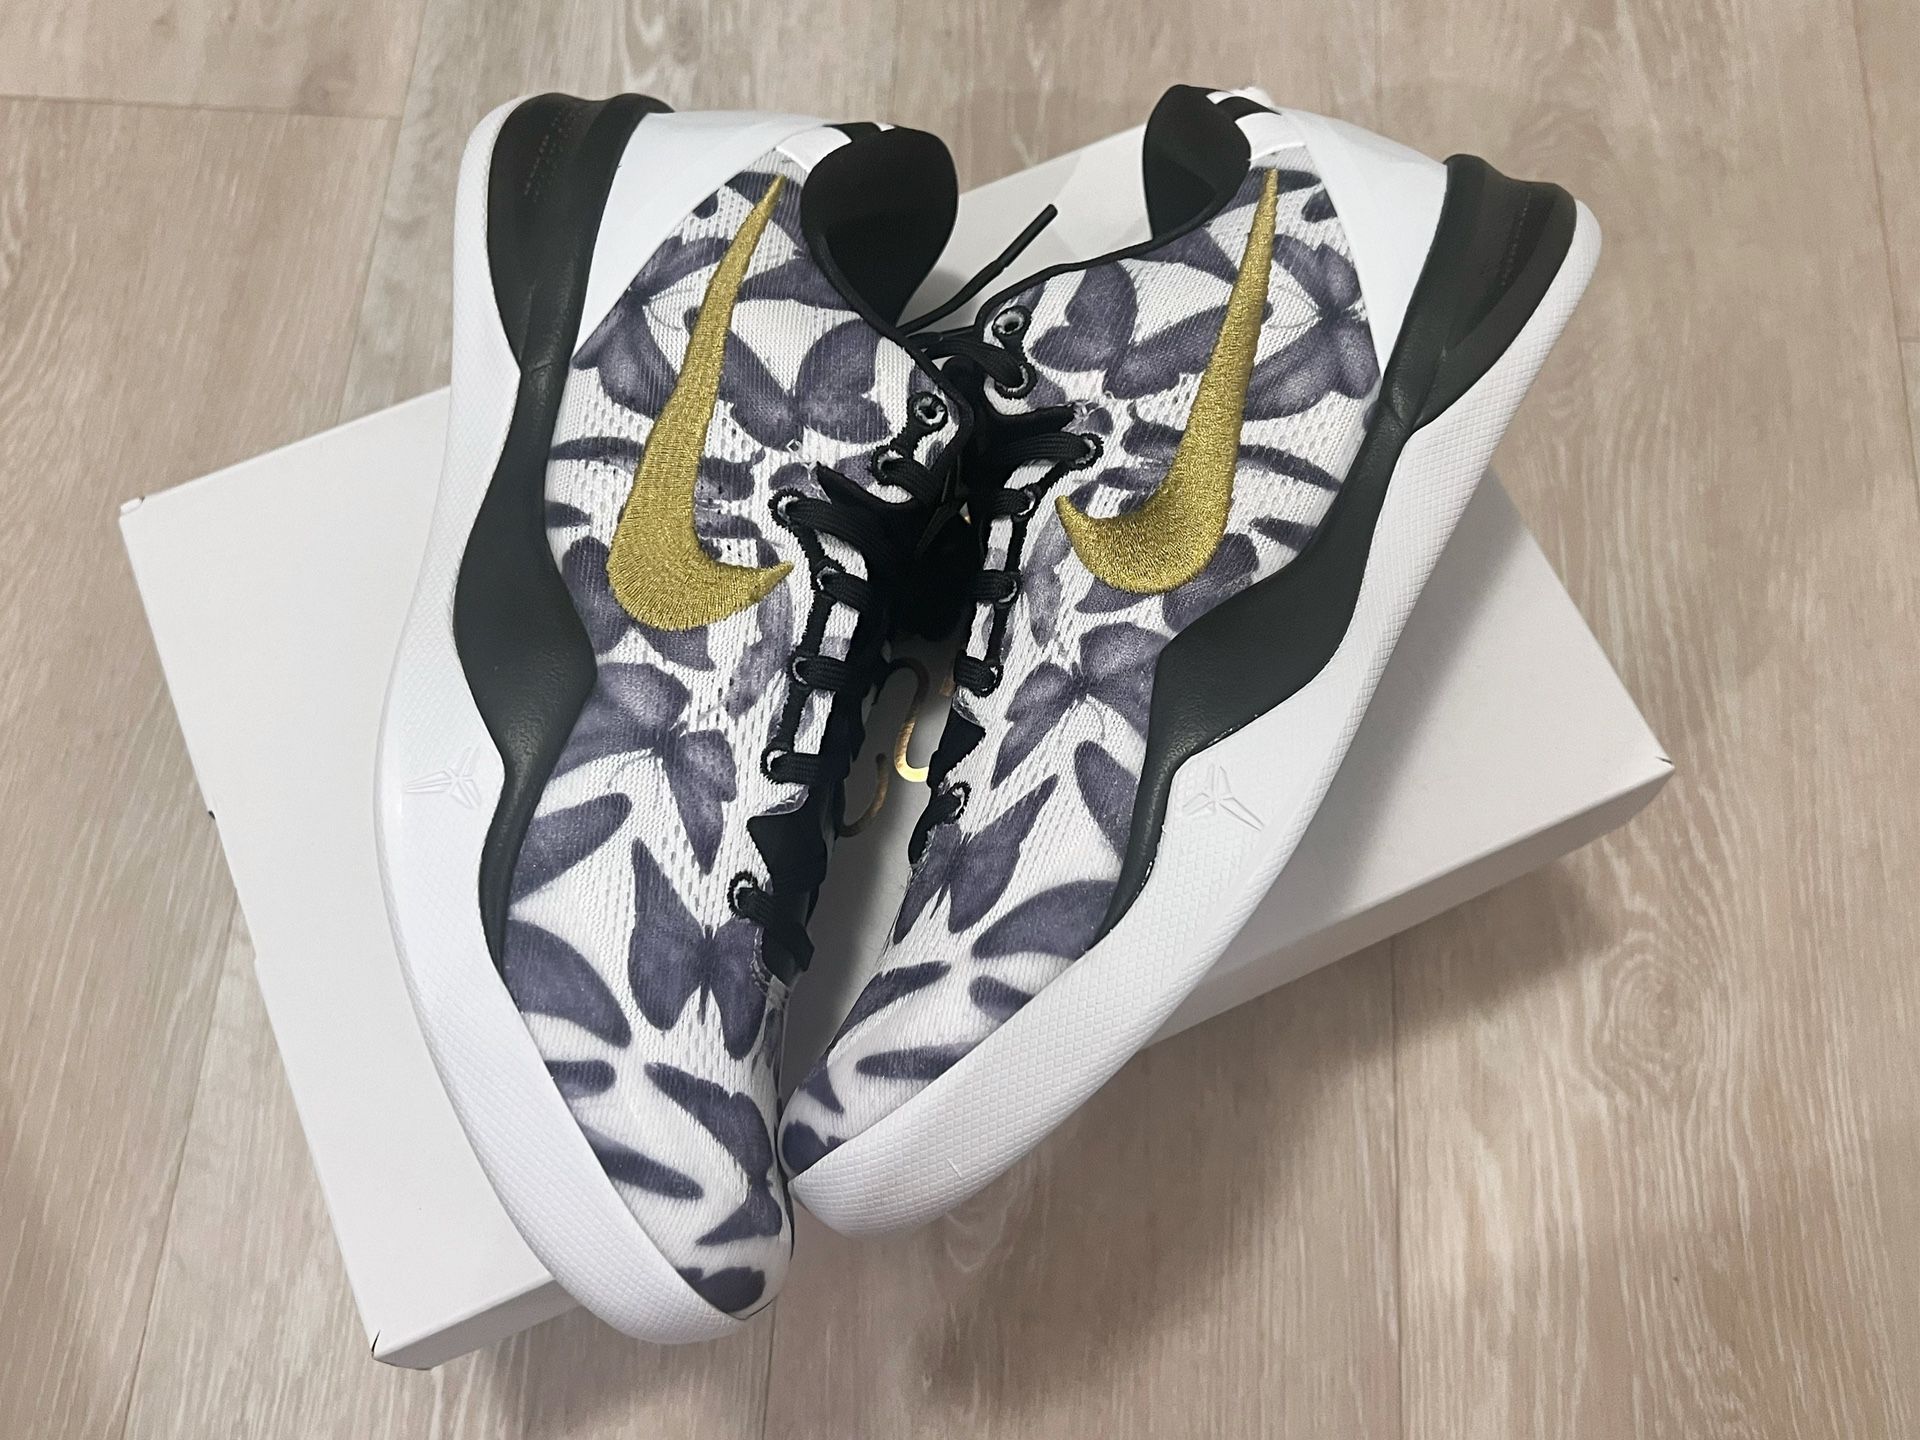 Nike Kobe 8 Protro Mambacita